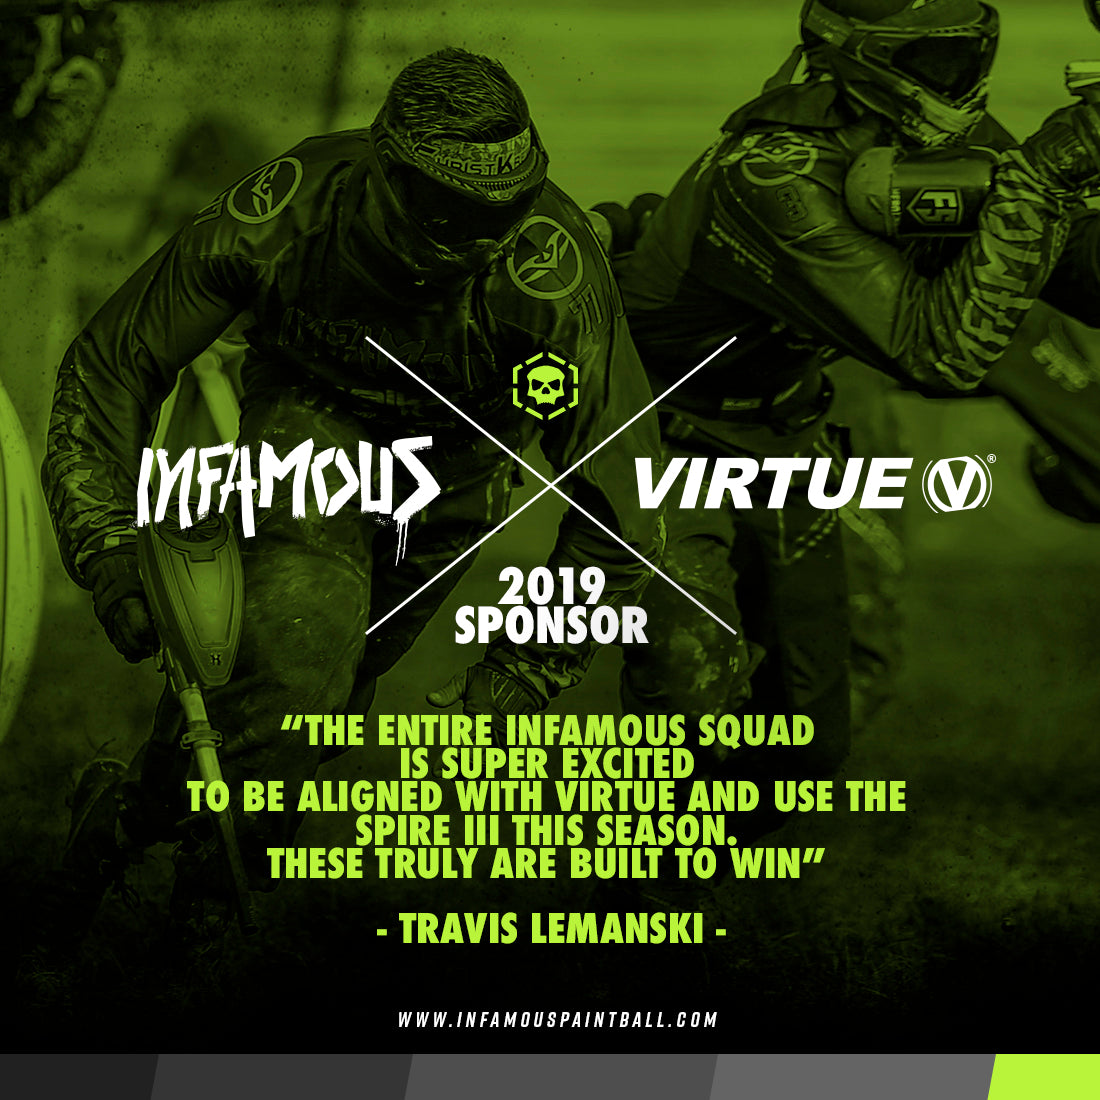 Virtue sponsors Infamous 2019